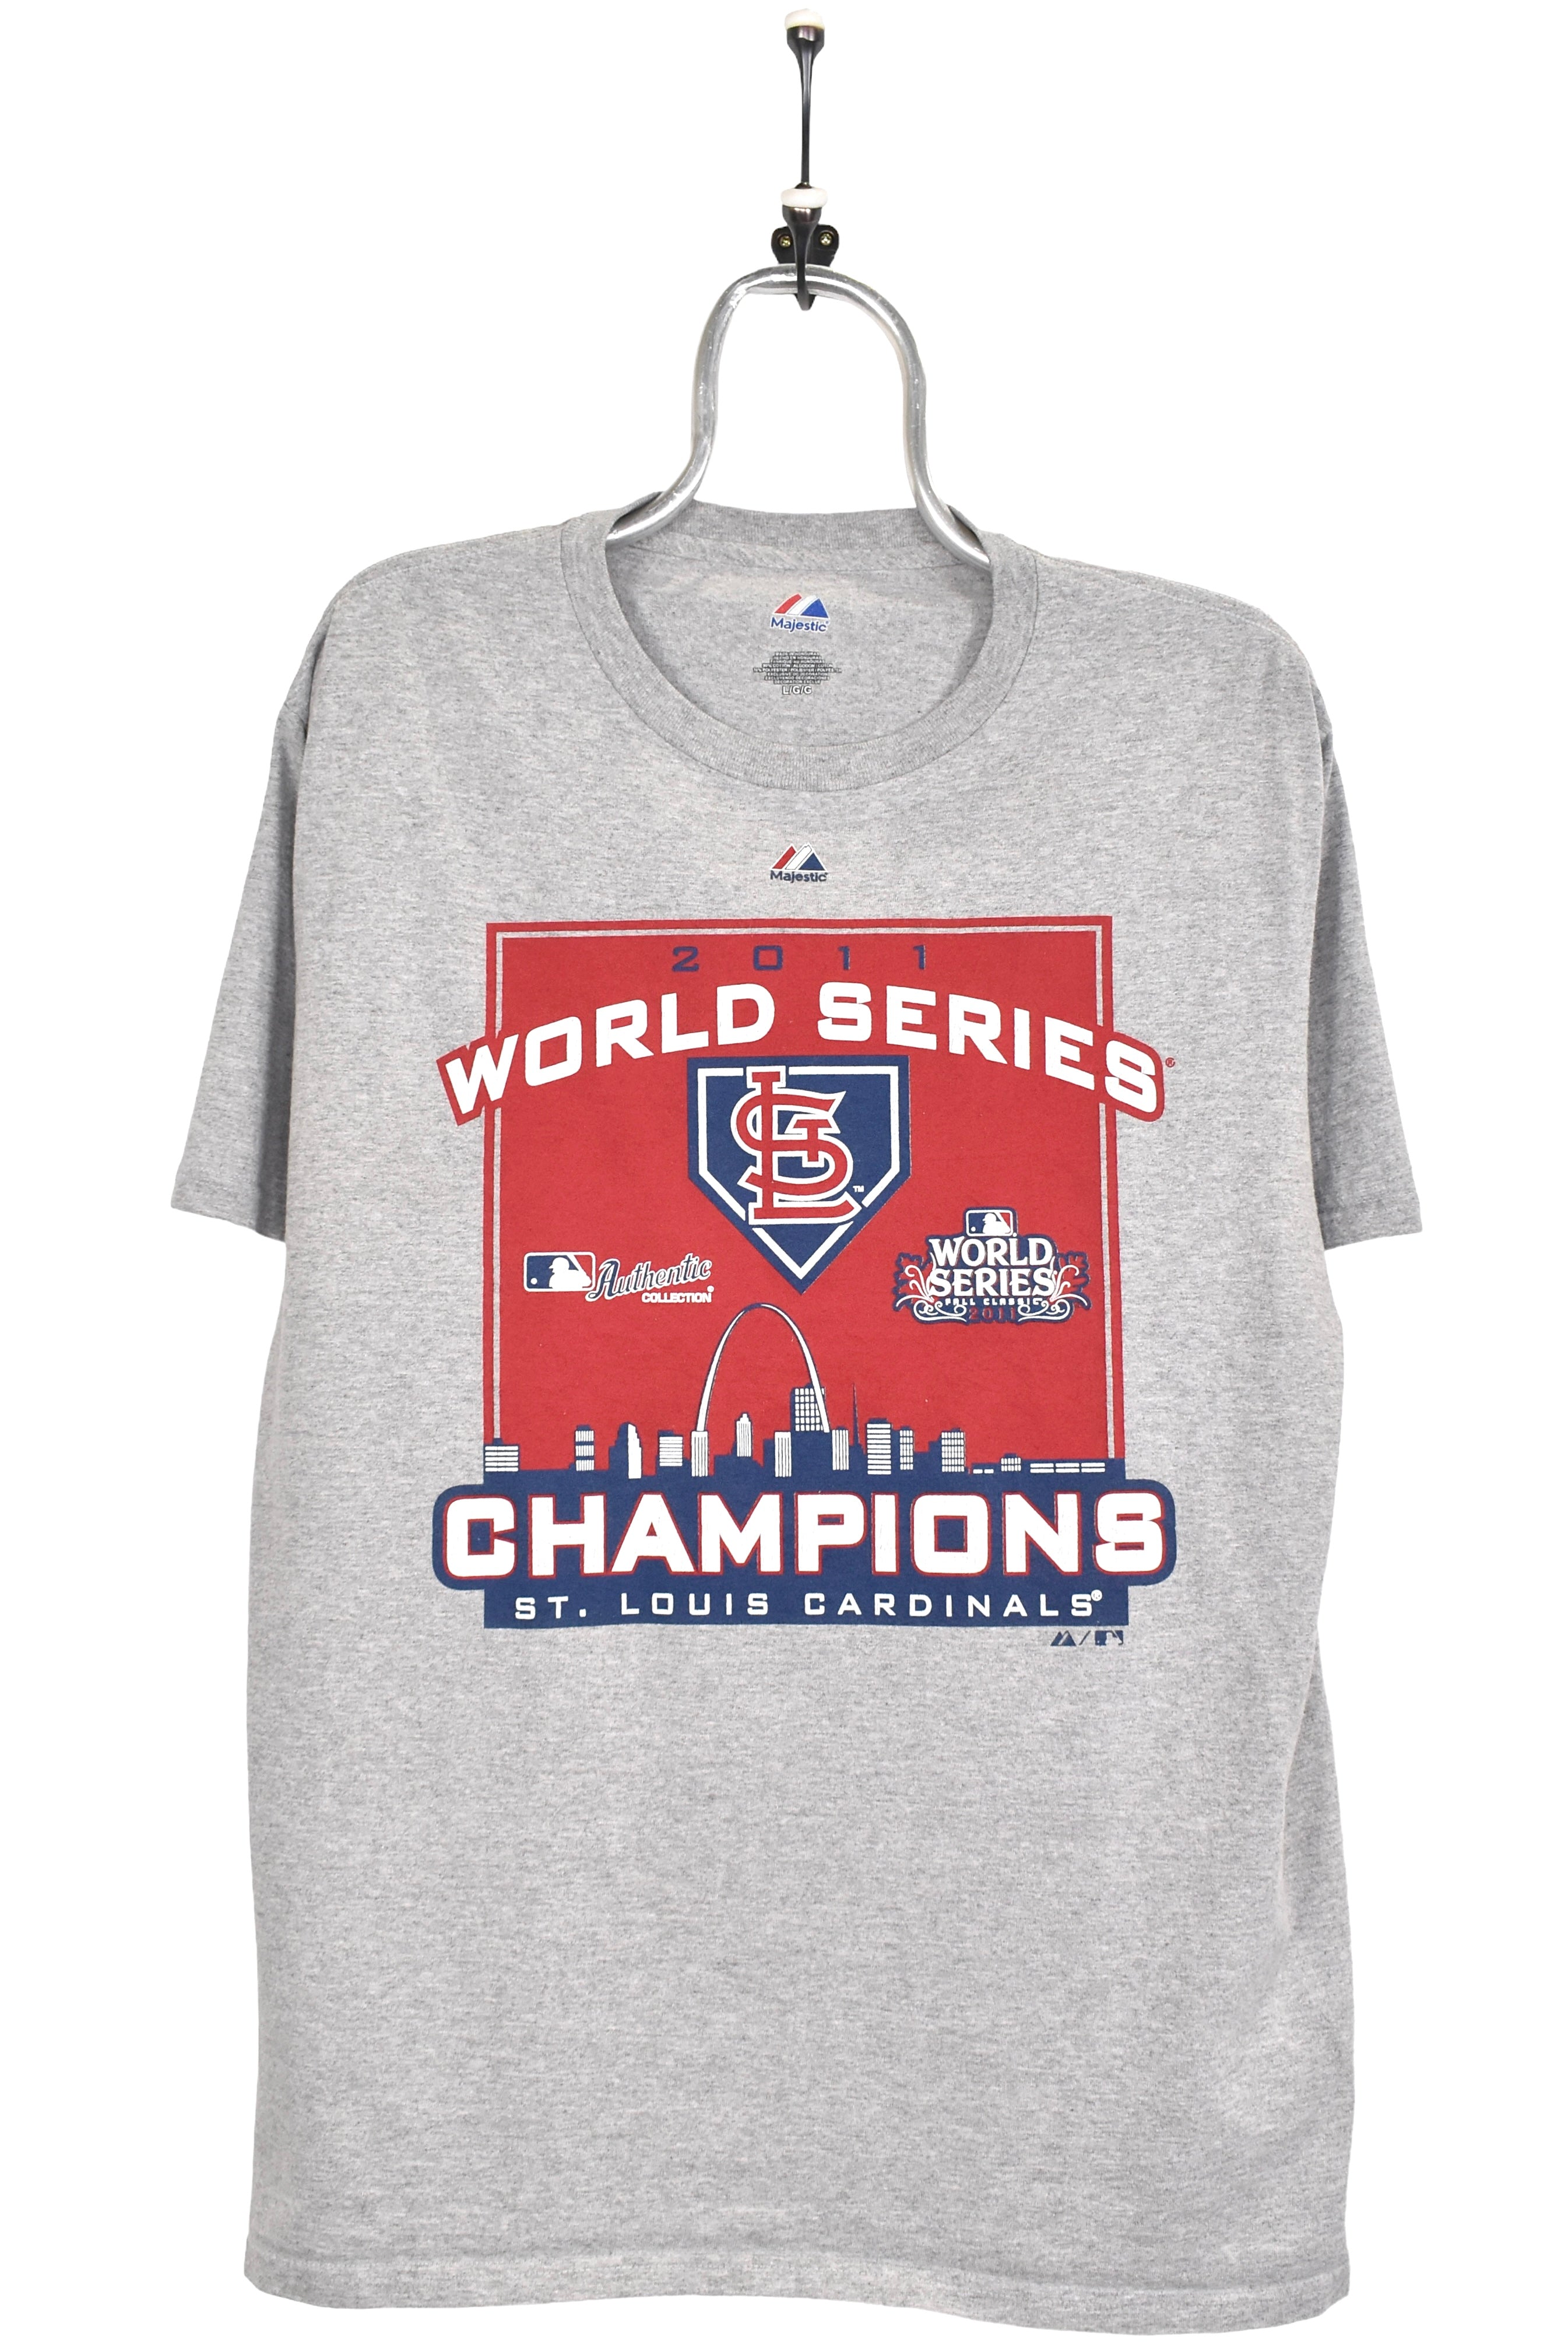 Modern World Series shirt, 2011 grey graphic tee - AU Large PRO SPORT